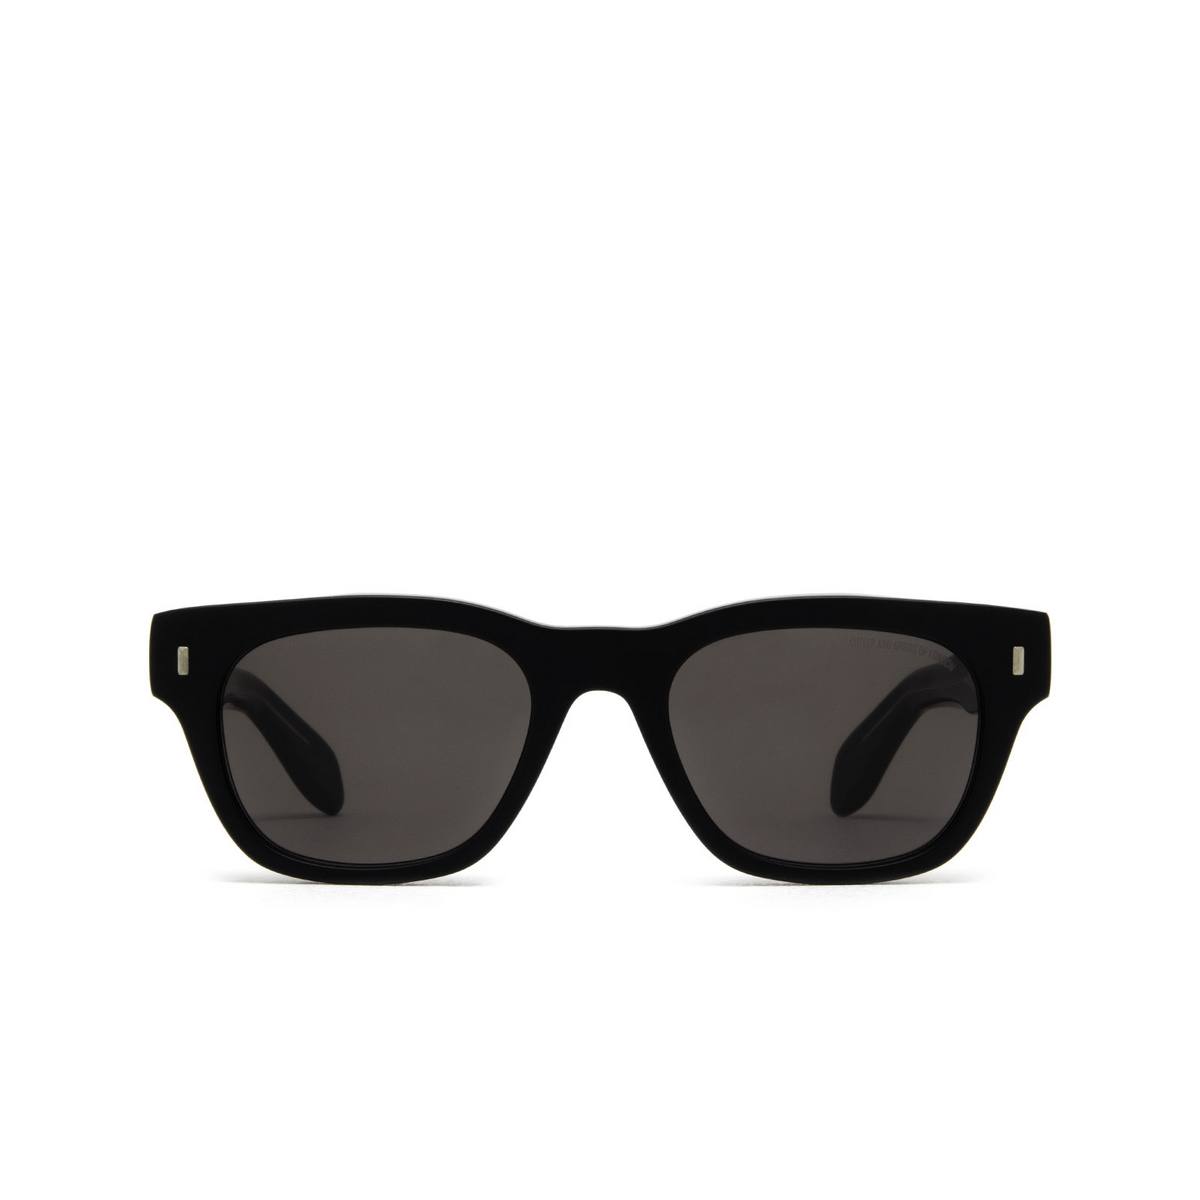 Cutler and Gross® Square Sunglasses: 9772 SUN color Matt Black 01 - front view.